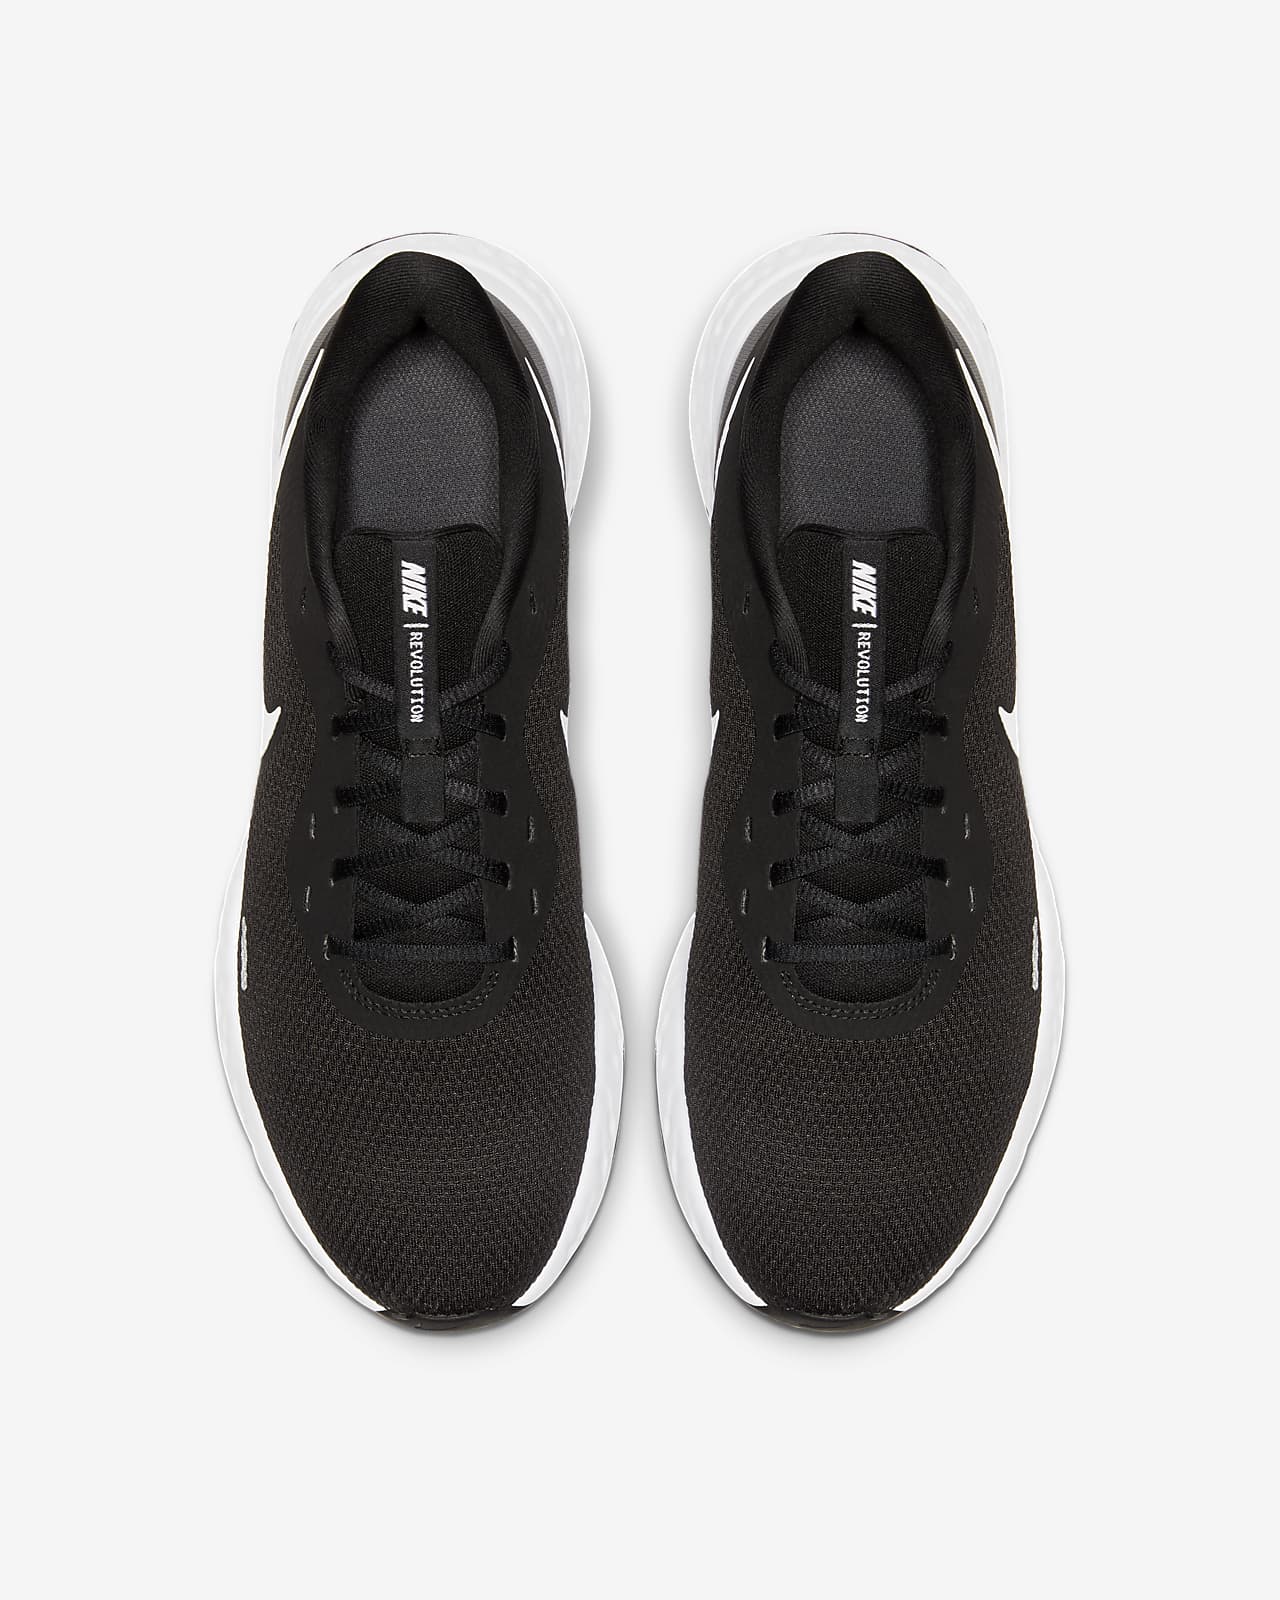 Revolution 5 Men's Running Shoes. Nike ID